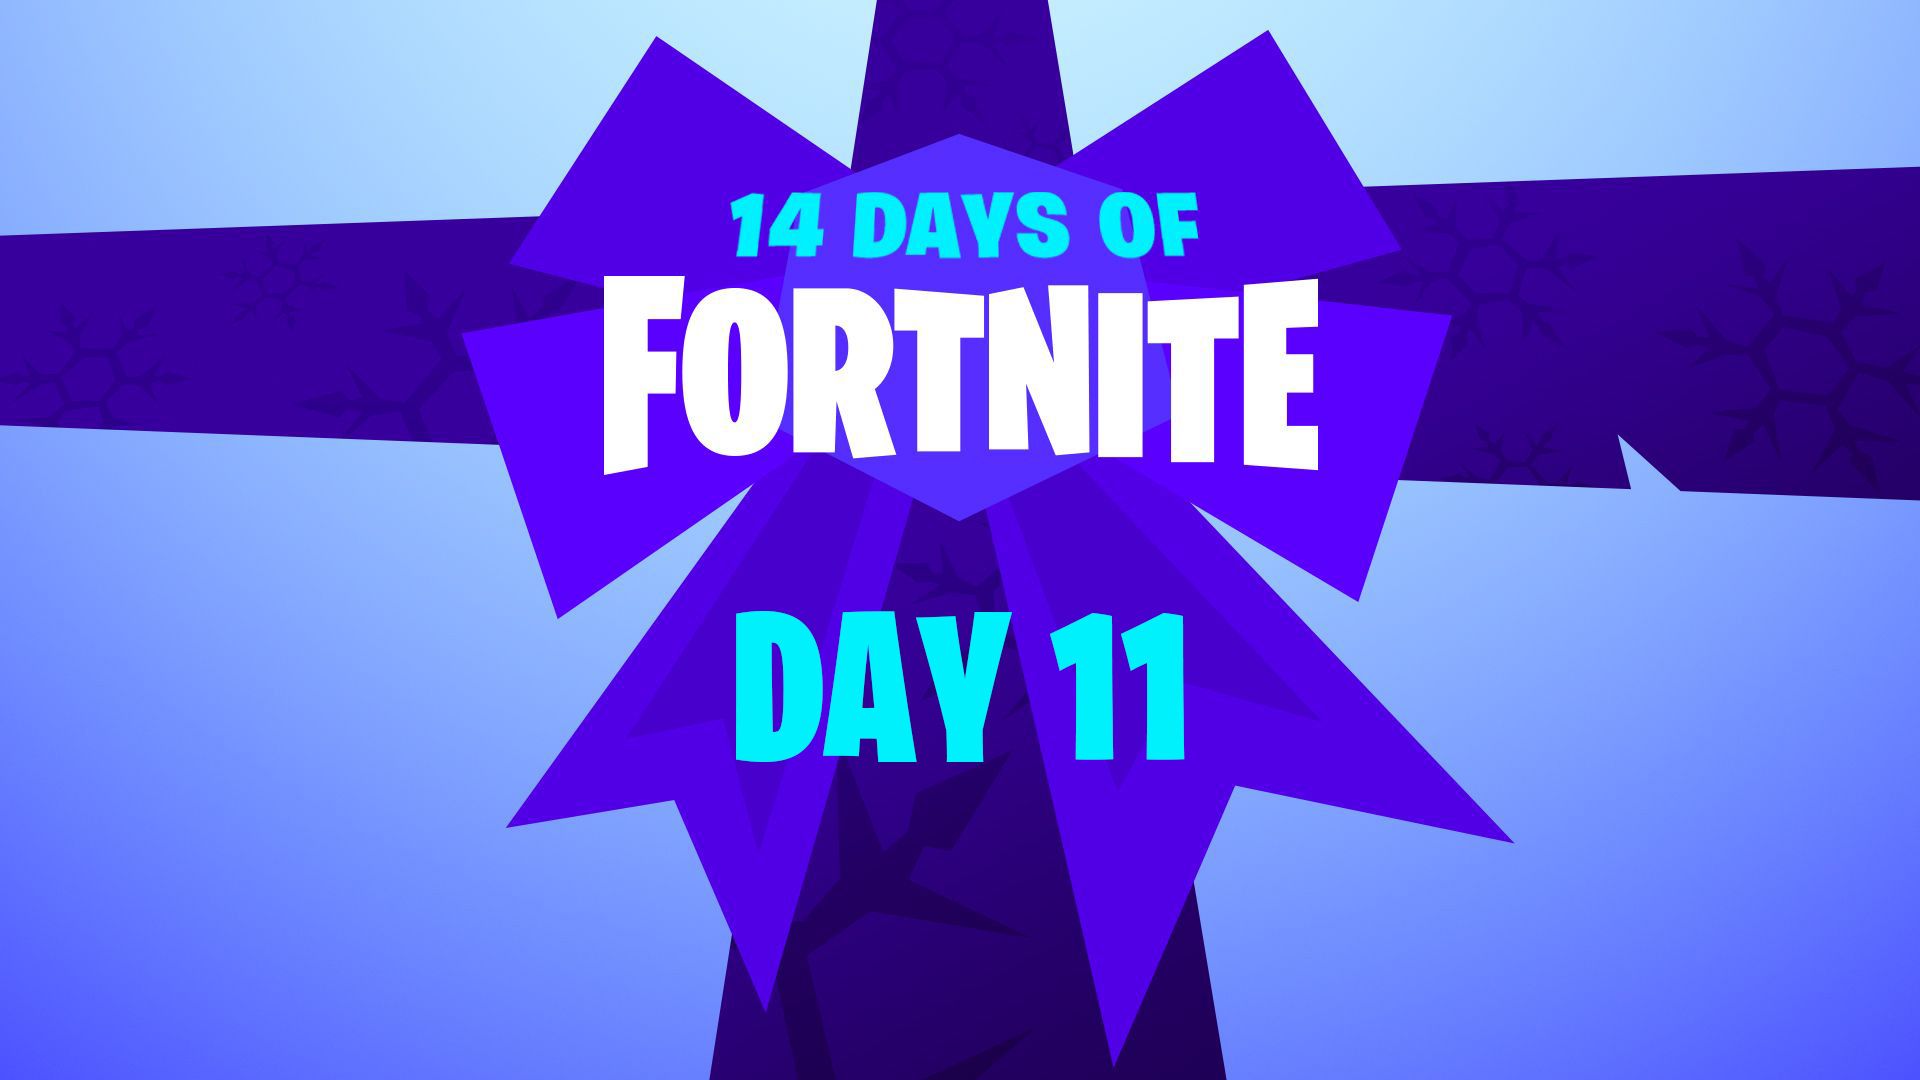 14 Days of Fortnite - Day 11 challenge & reward